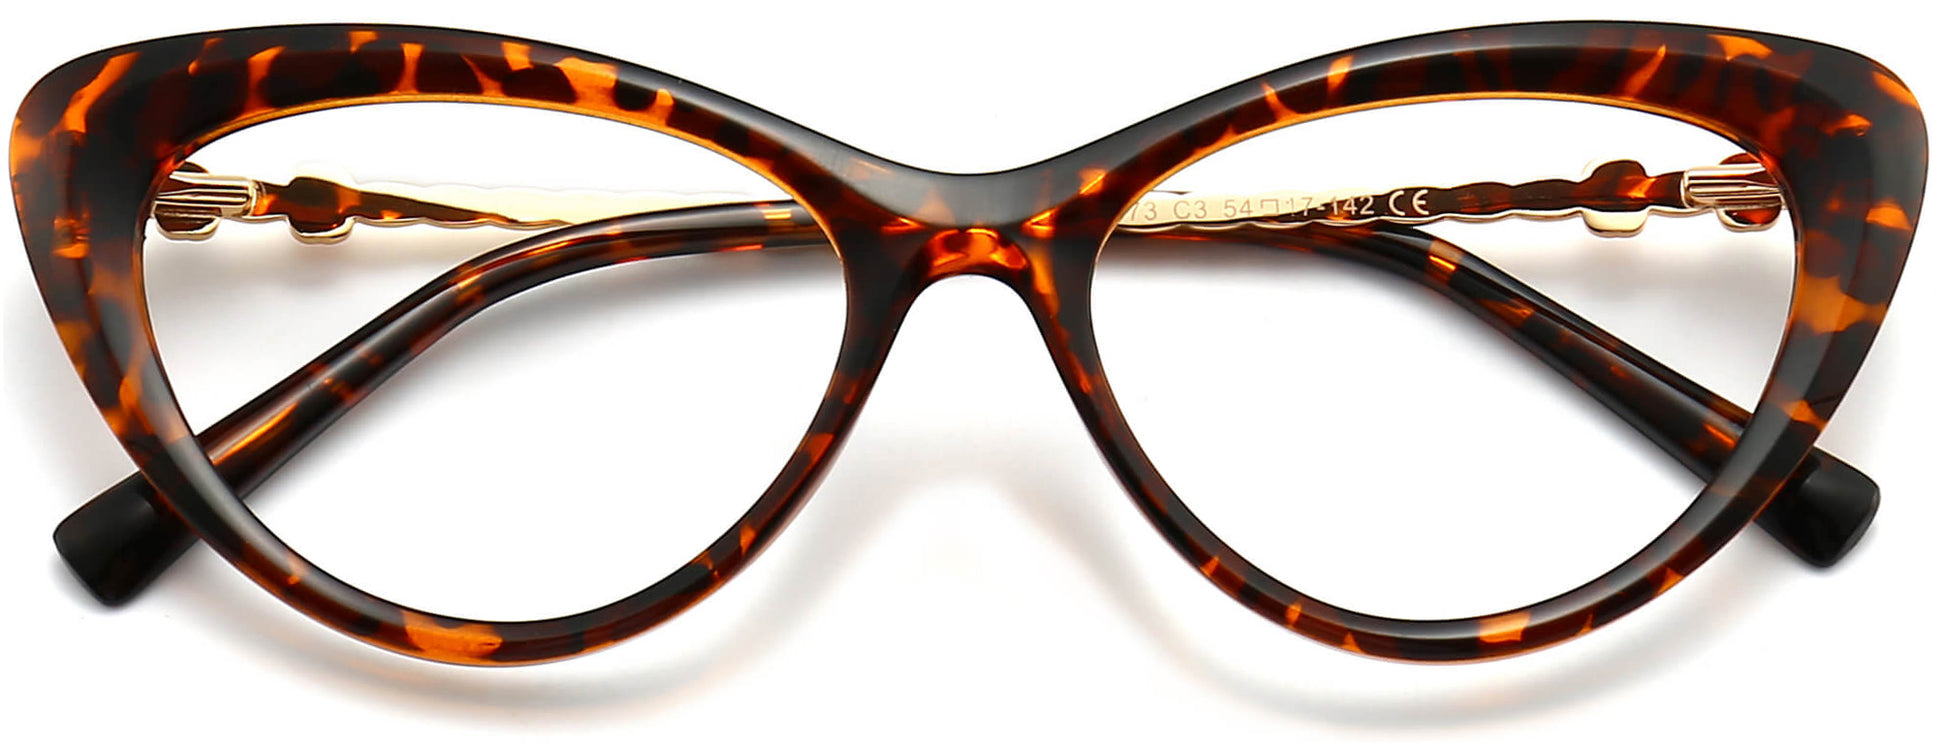 Everett Cateye Tortoise Eyeglasses from ANRRI, closed view